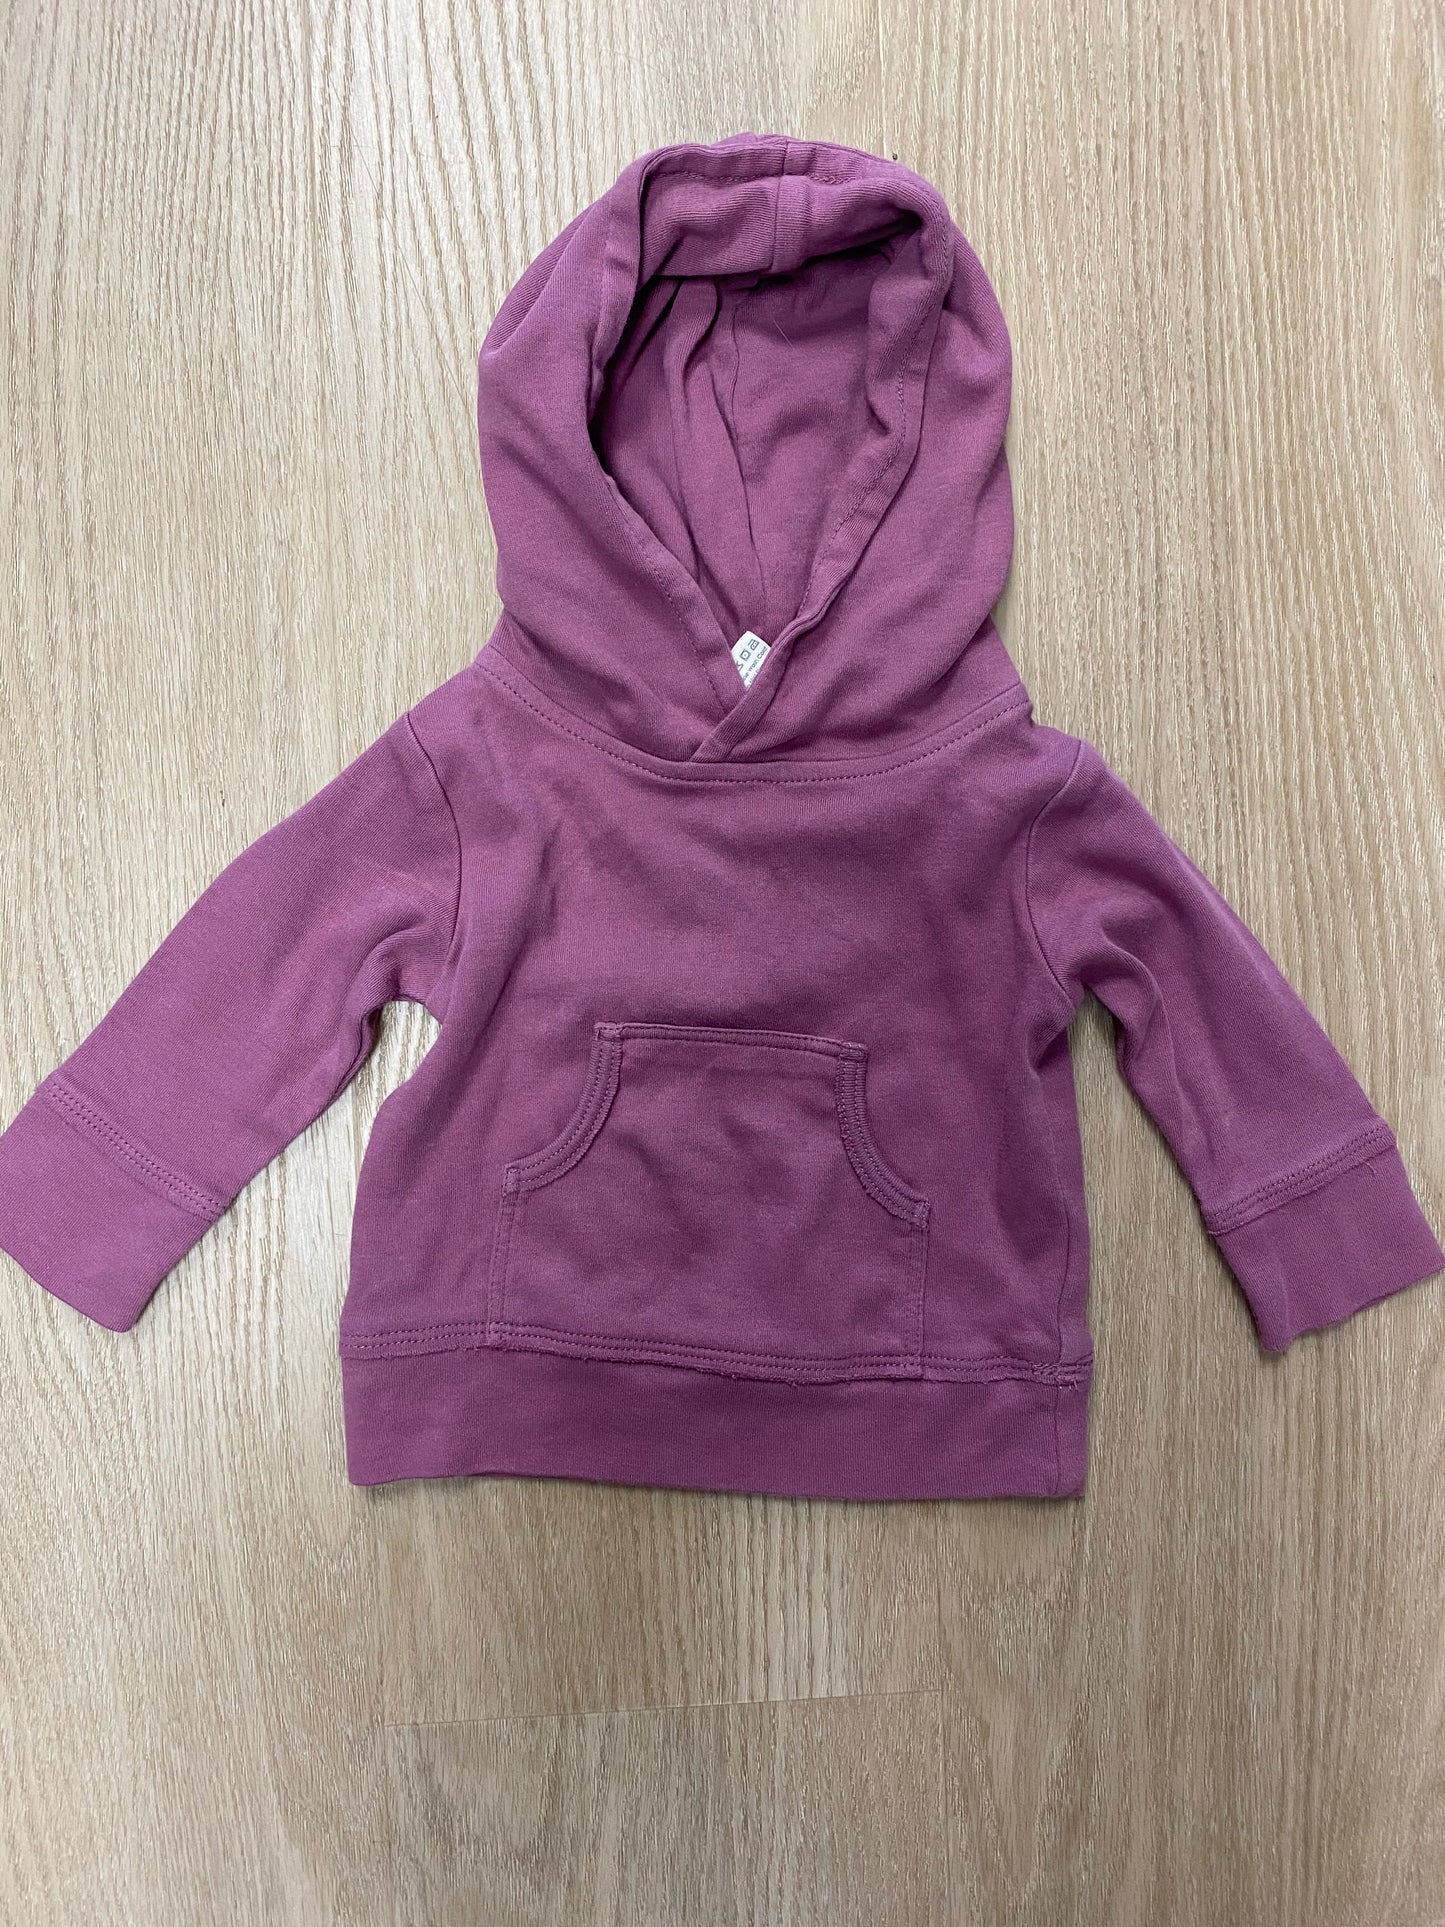 Kate Quinn Child Size 3 Months Raspberry Hooded Sweatshirt